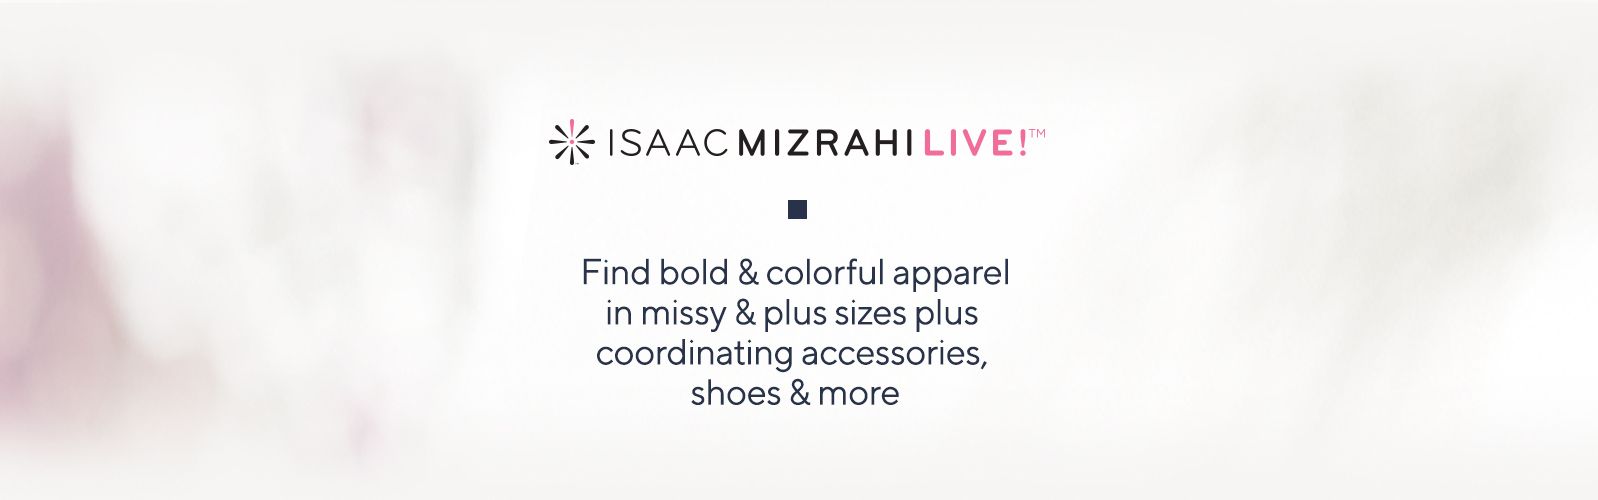 Imnyc Isaac Mizrahi Size Chart